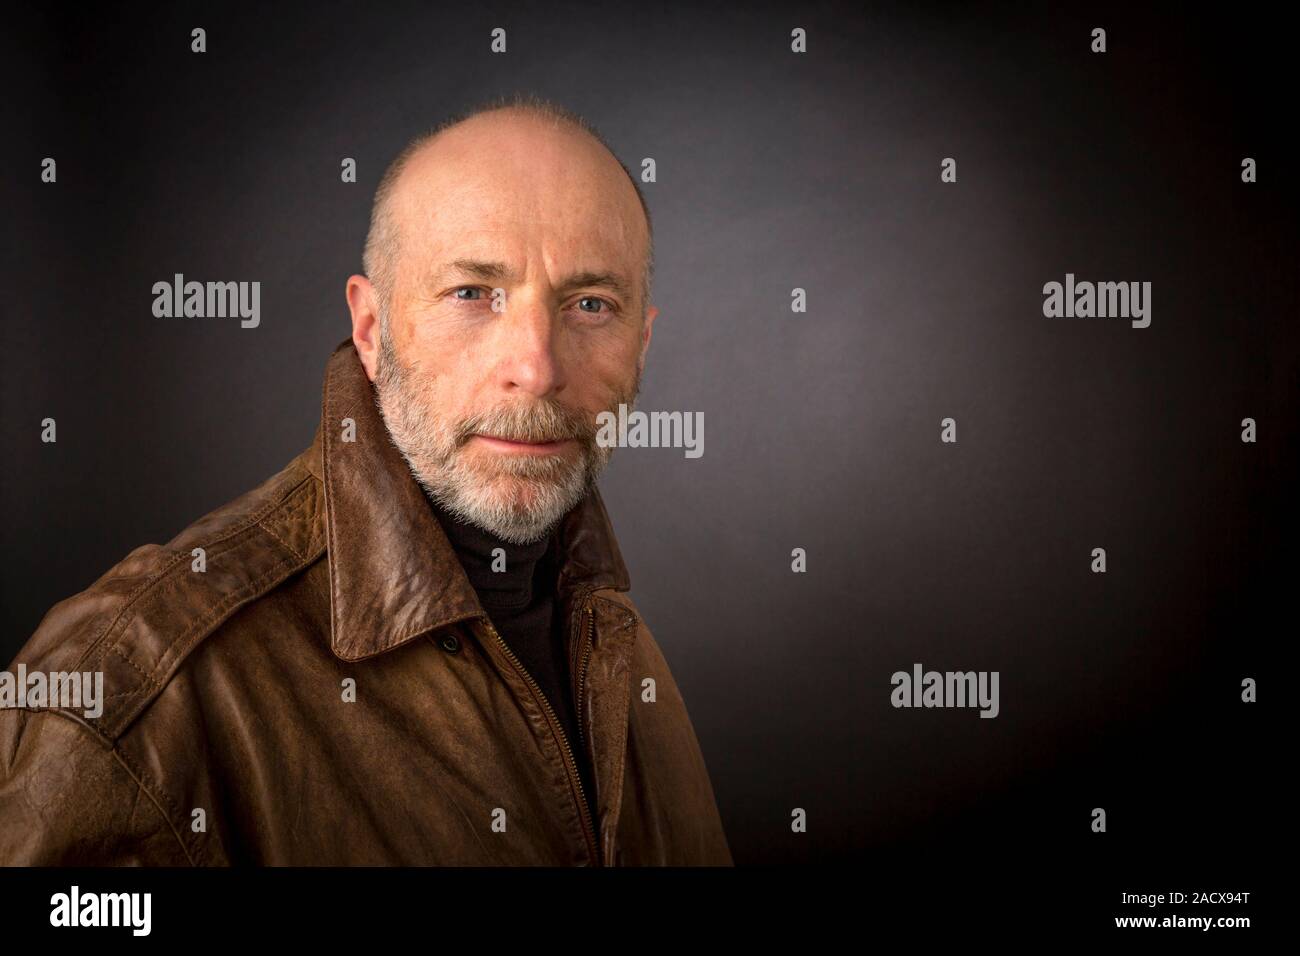 confident smirking senior man in leather jacket - an authentic headshot against a dark background Stock Photo